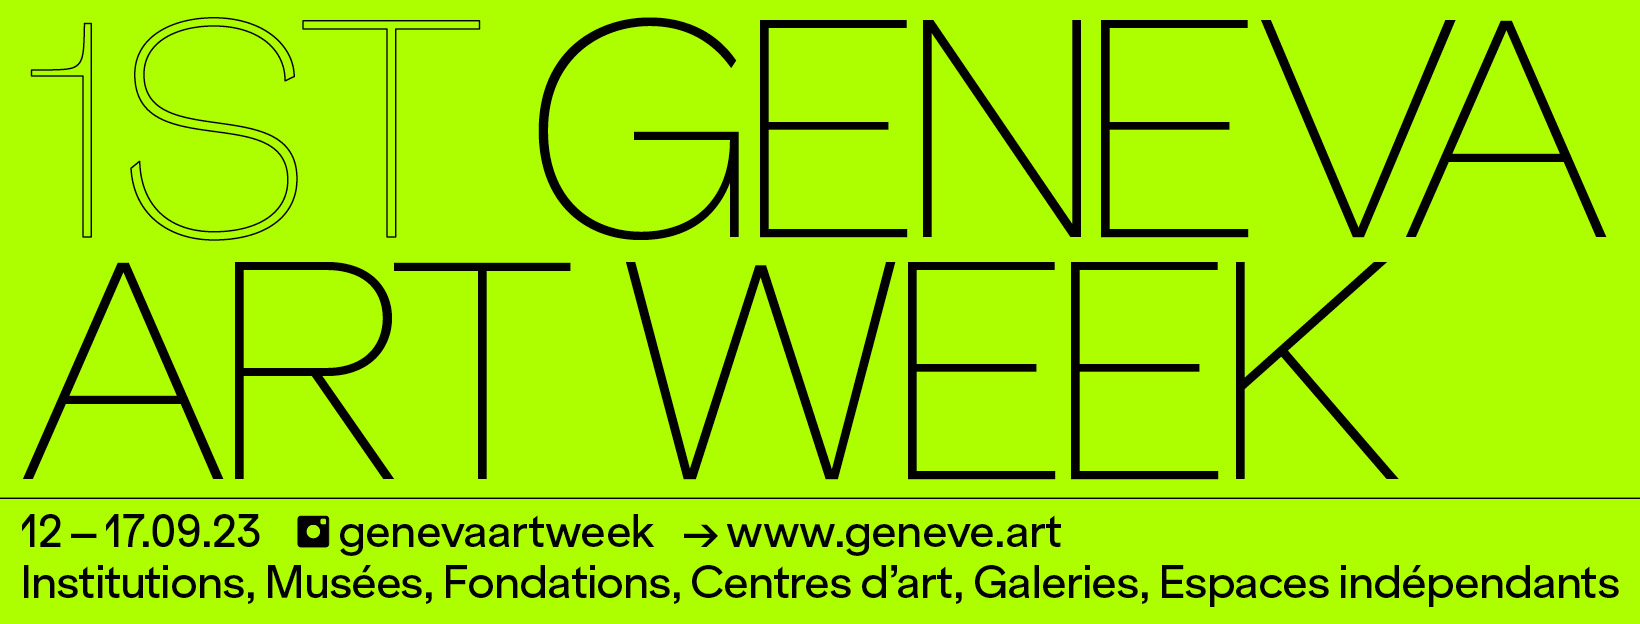 Geneva Art Week